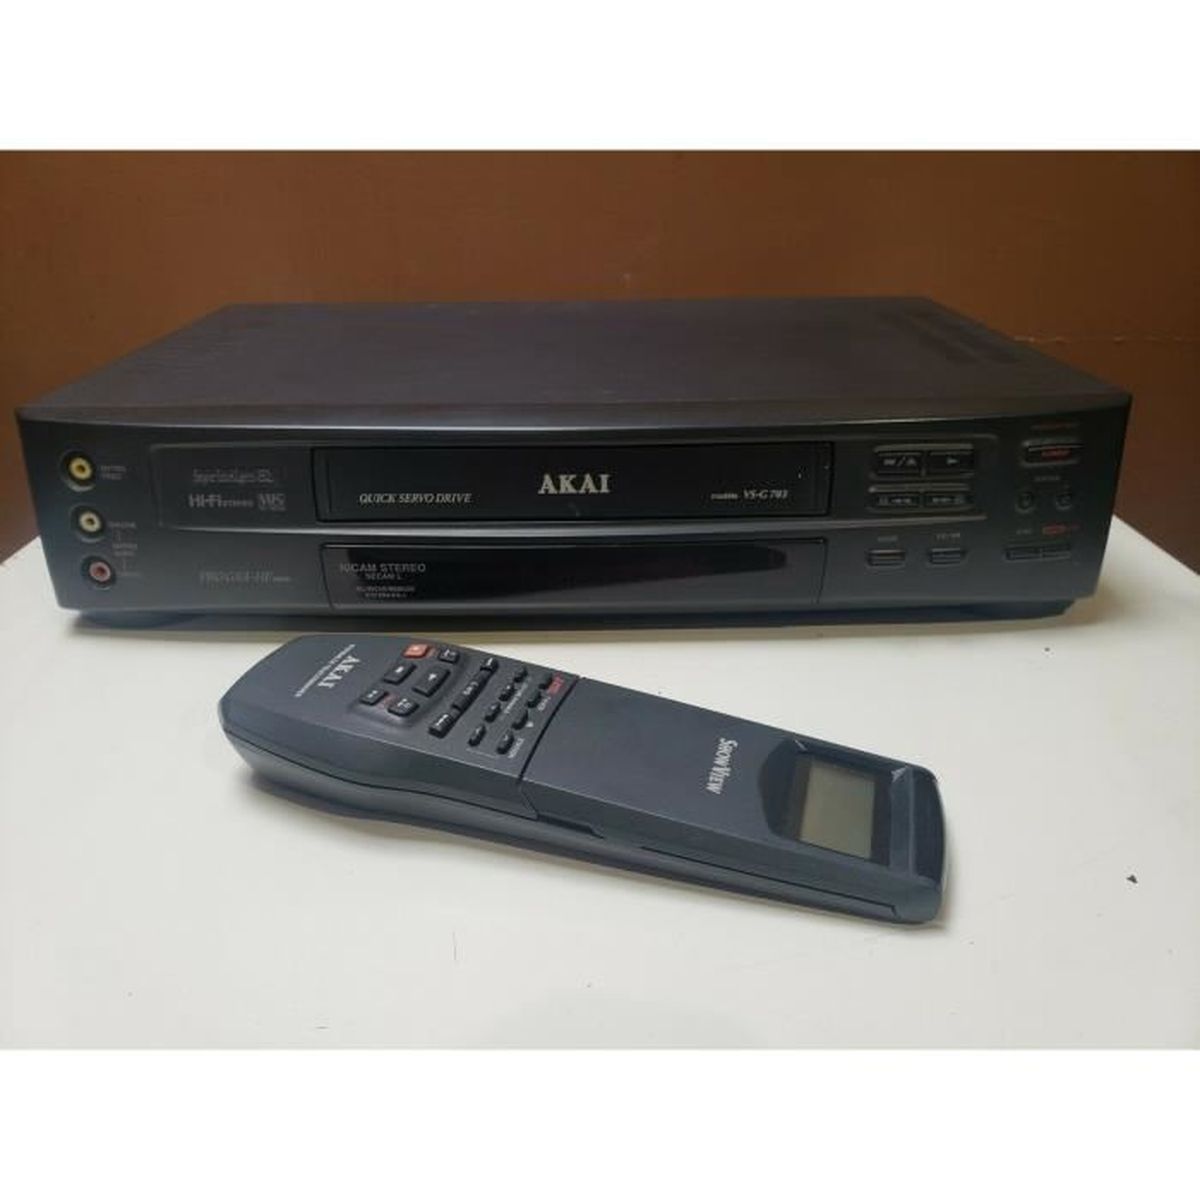 AKAI VS-J703 Magnétoscope VHS avec télécommande 